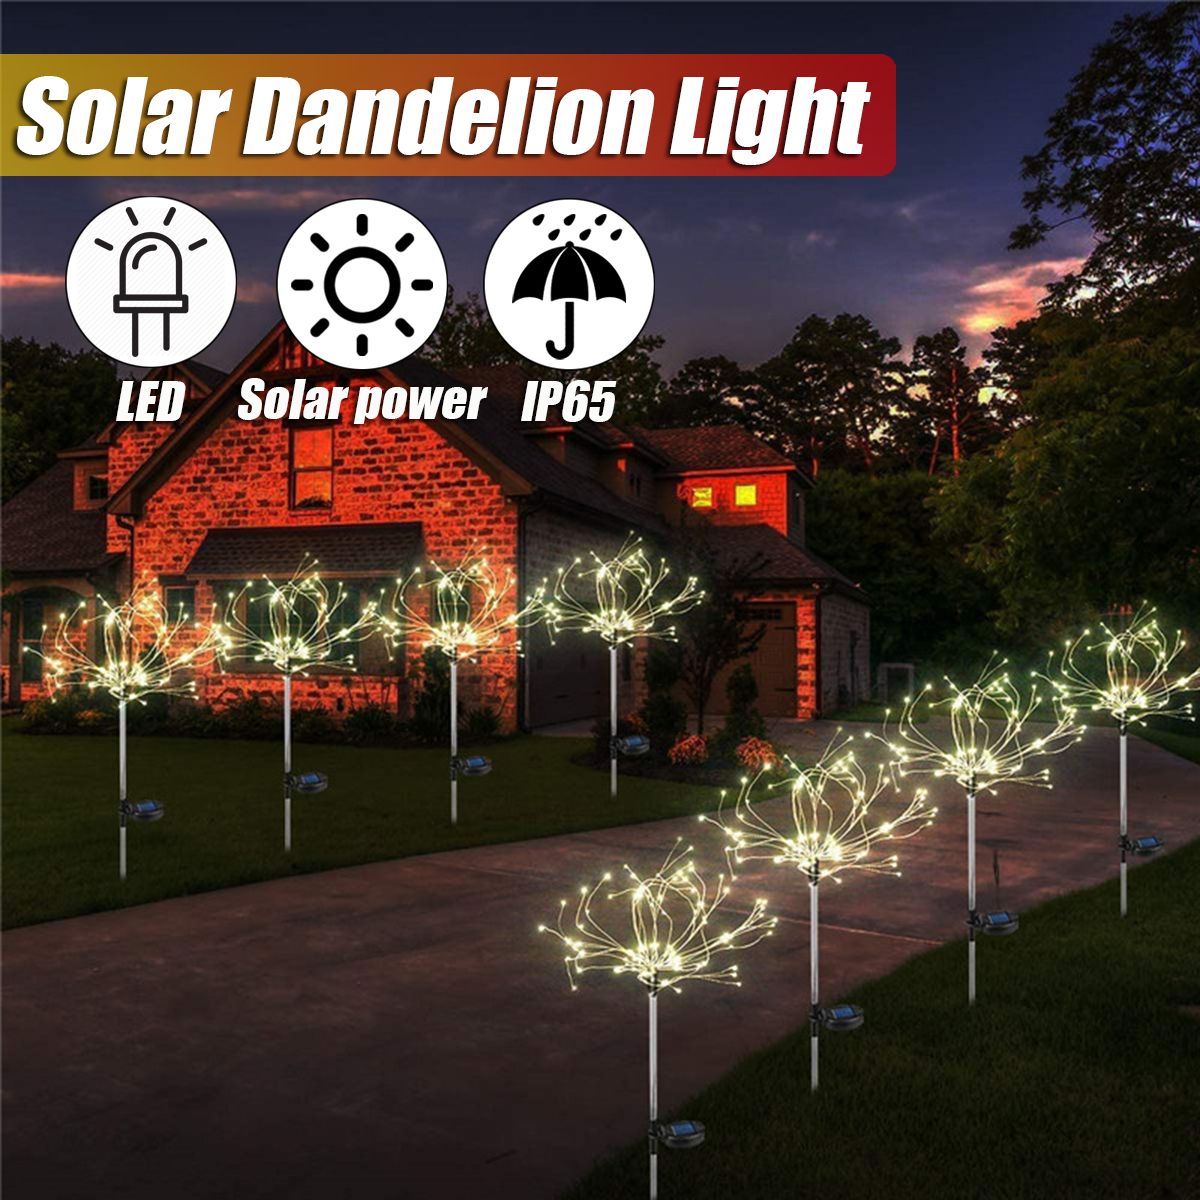 Outdoor-Solar-Garden-Stake-Lights-Dandelions-Lamps-90120150-LED-Lawn-Landscape-1708222